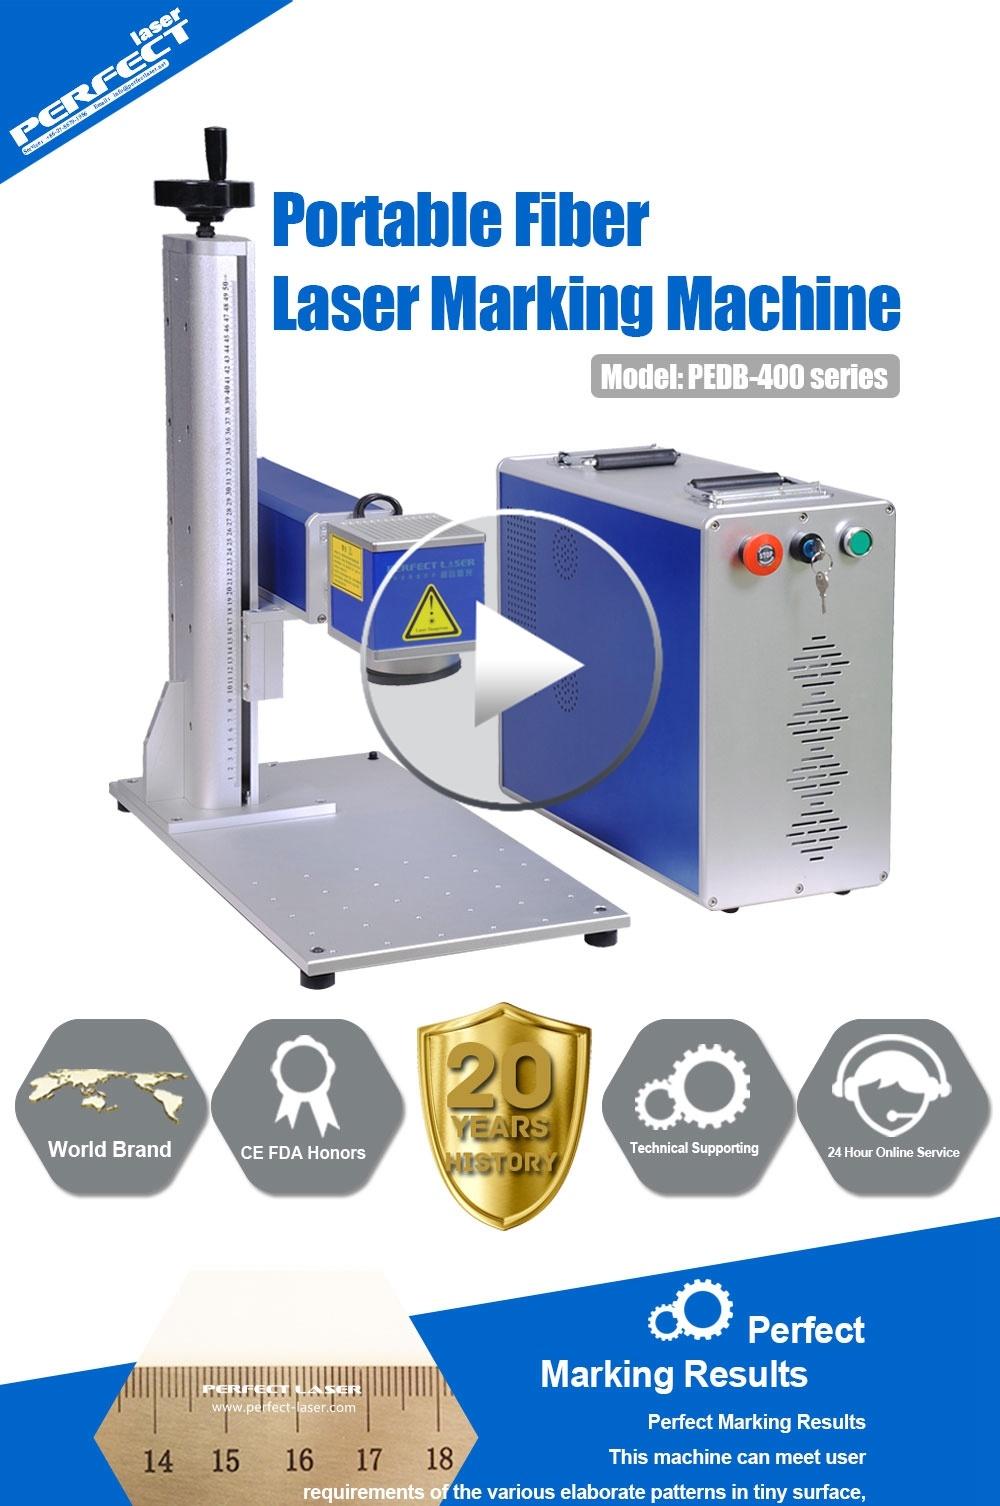 Portable Handheld Laser Marker for Metals and Plastic Laser Engraving Machine Price